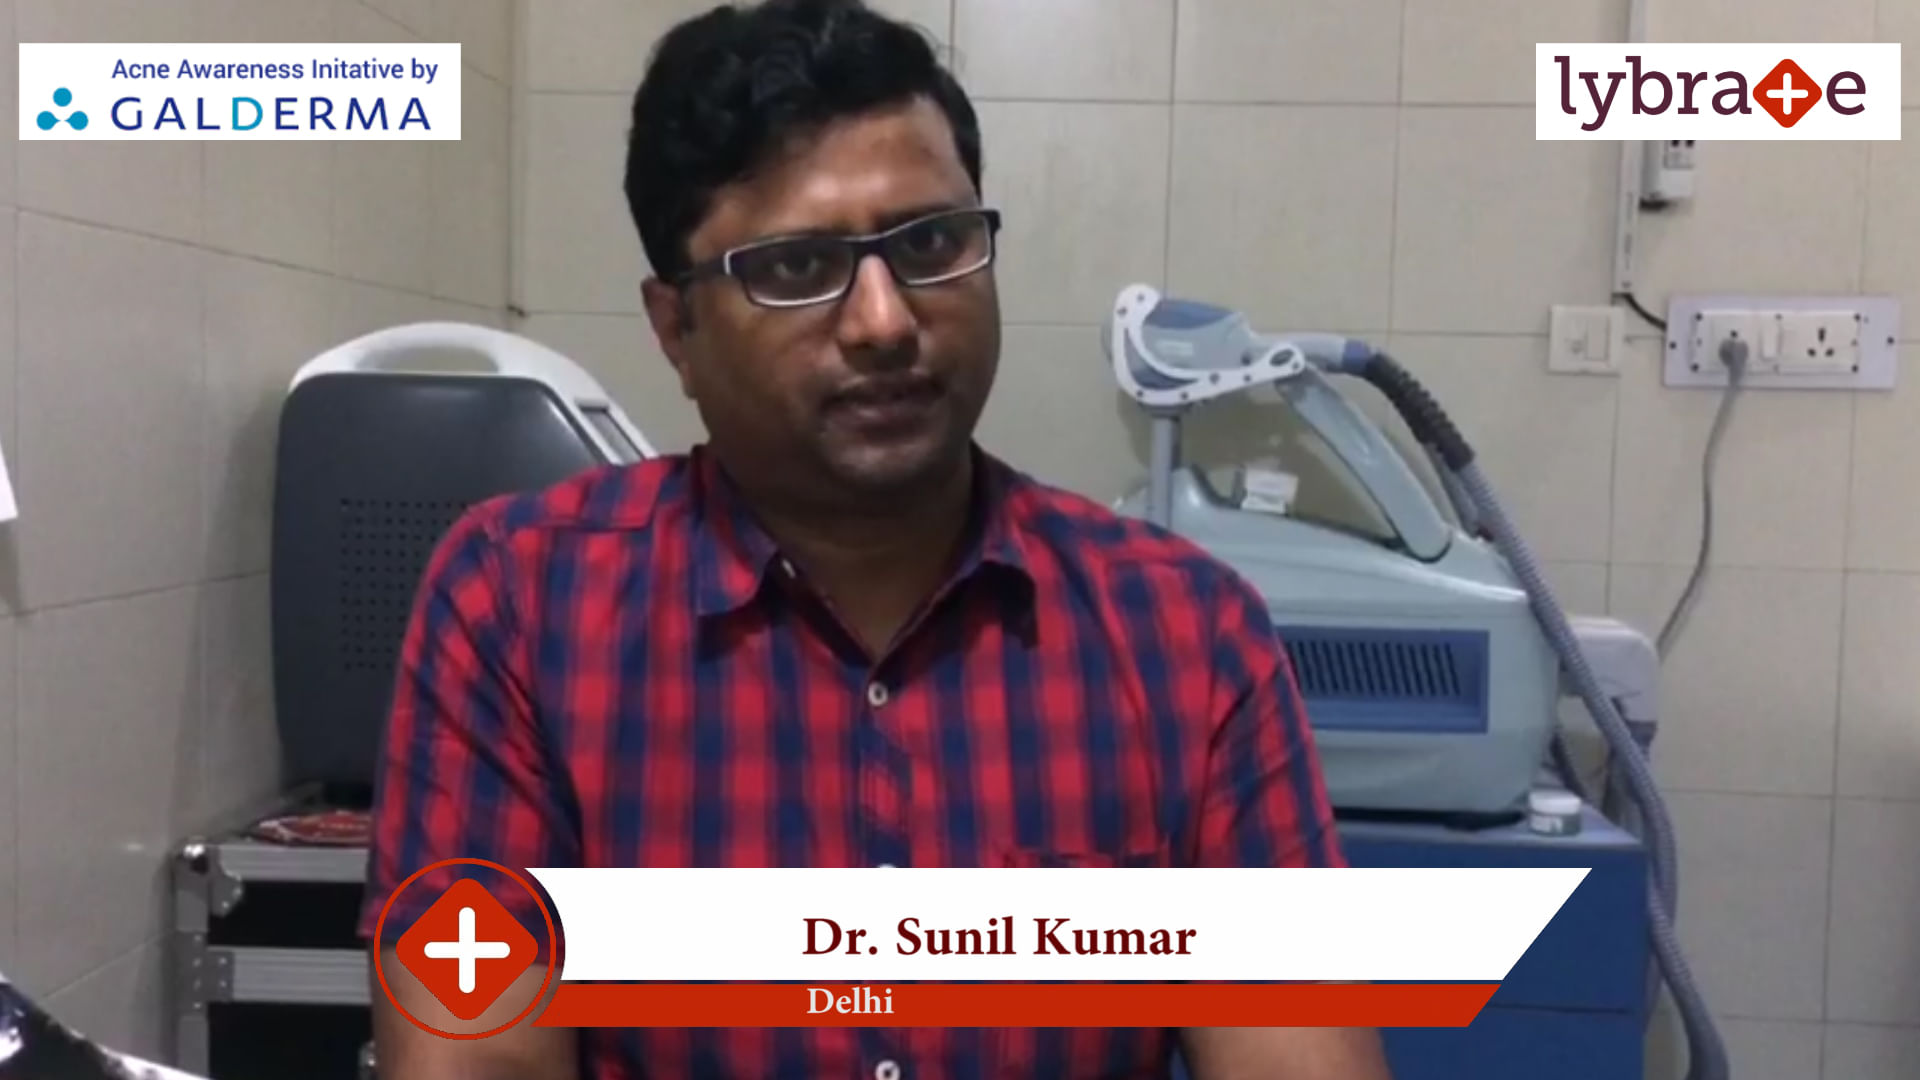 Lybrate | Dr. Sunil Kumar speaks on IMPORTANCE OF TREATING ACNE EARLY